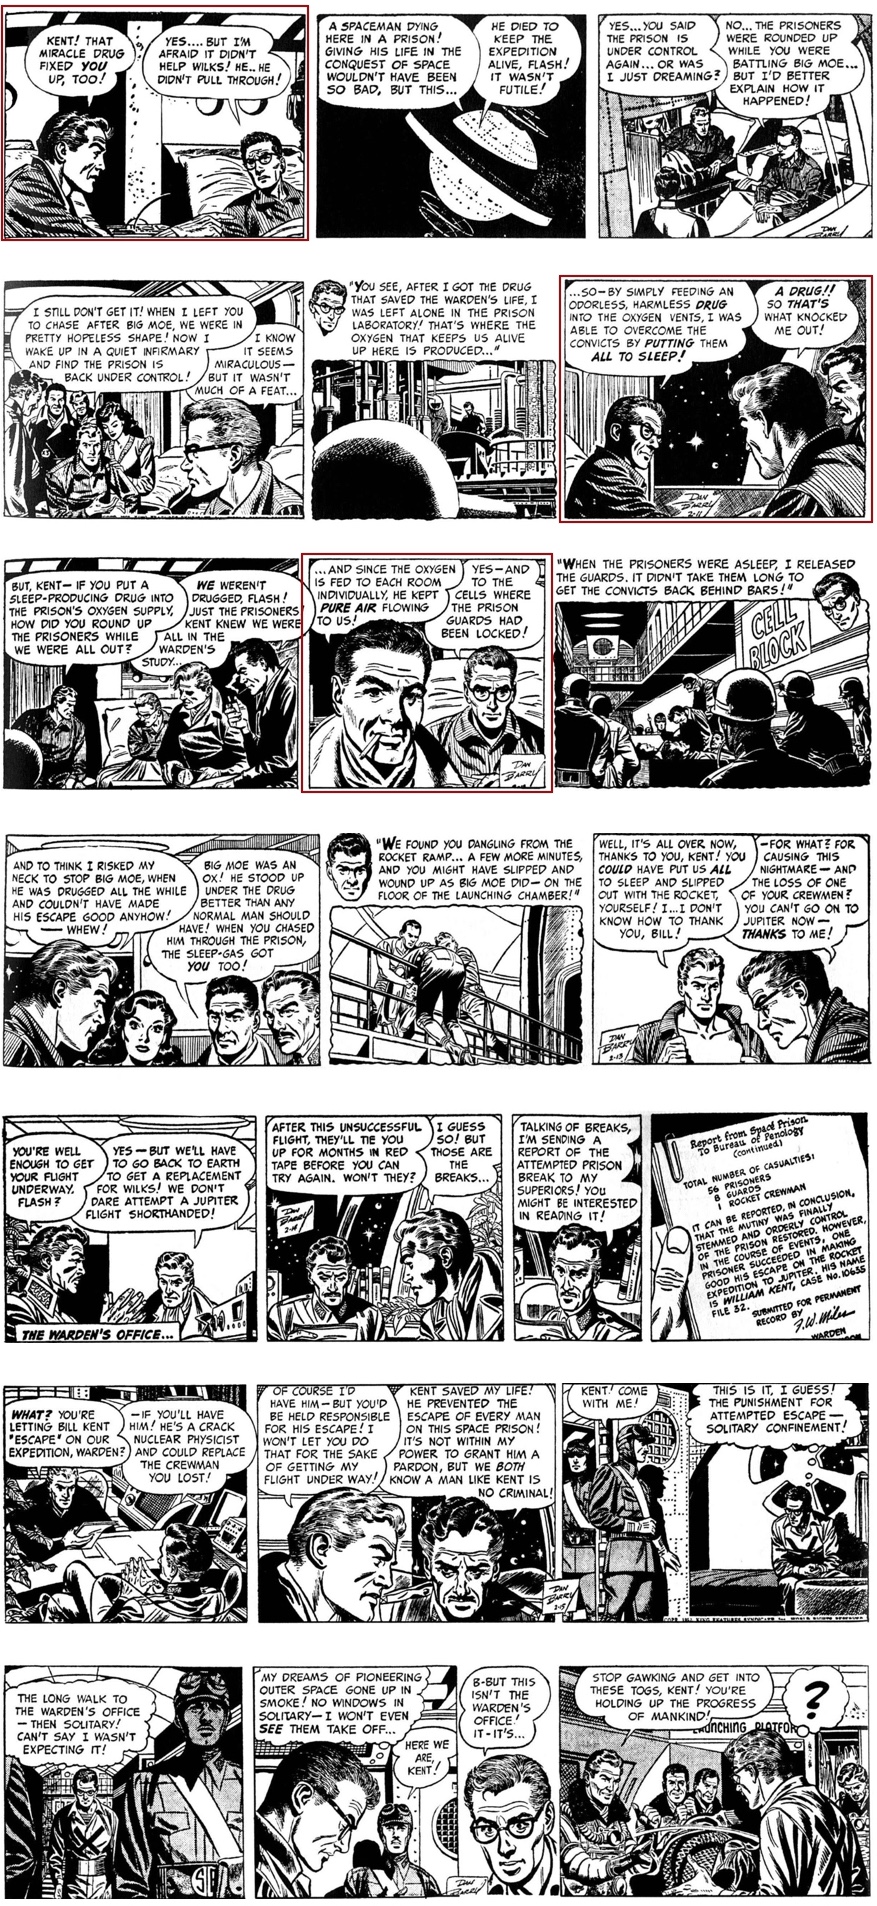 Flash Gordon 9-16 februari 1952